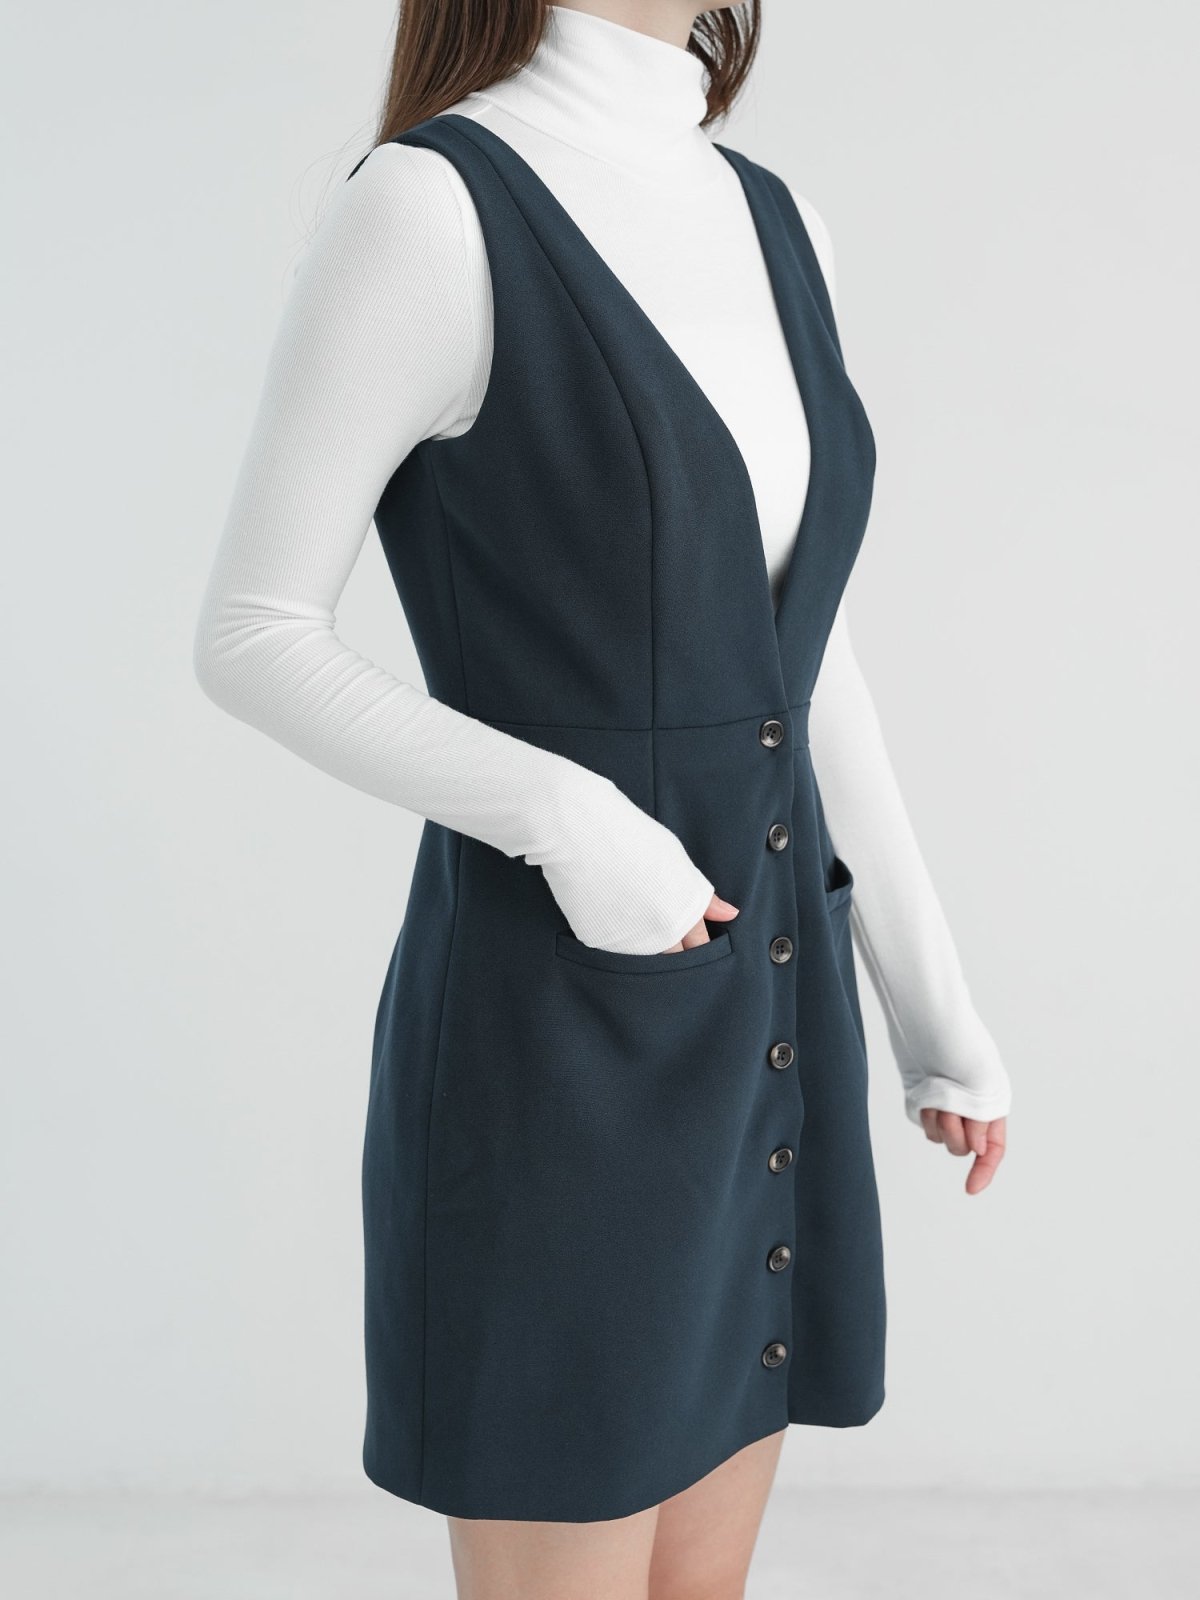 Aspen V-neck Sleeveless Dress - DAG-DD1302-23NavyTealS - Navy Teal - S - D'zage Designs